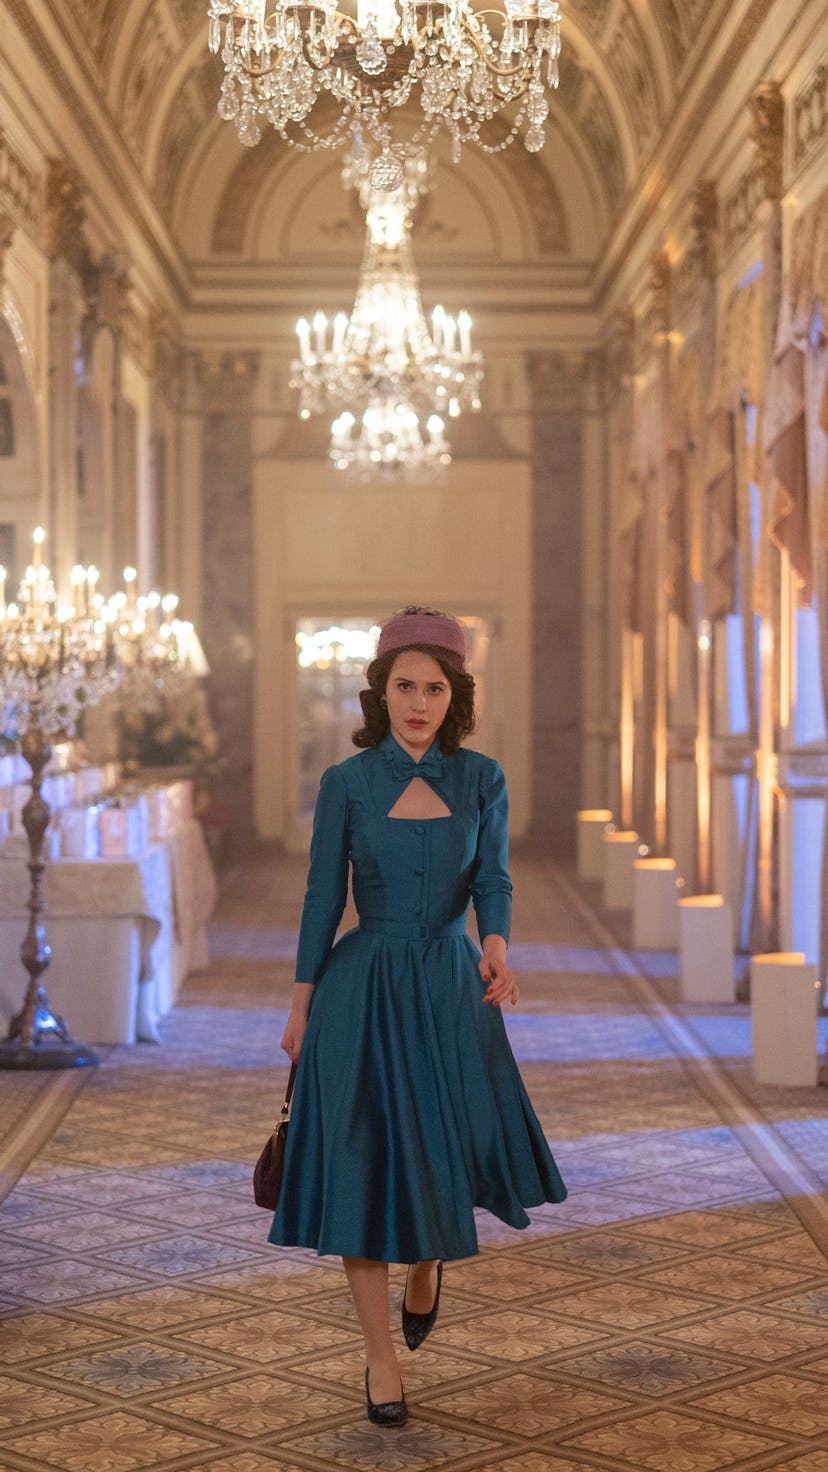 Rachel Brosnahan as Midge Maisel in a blue dress and pillbox hat.